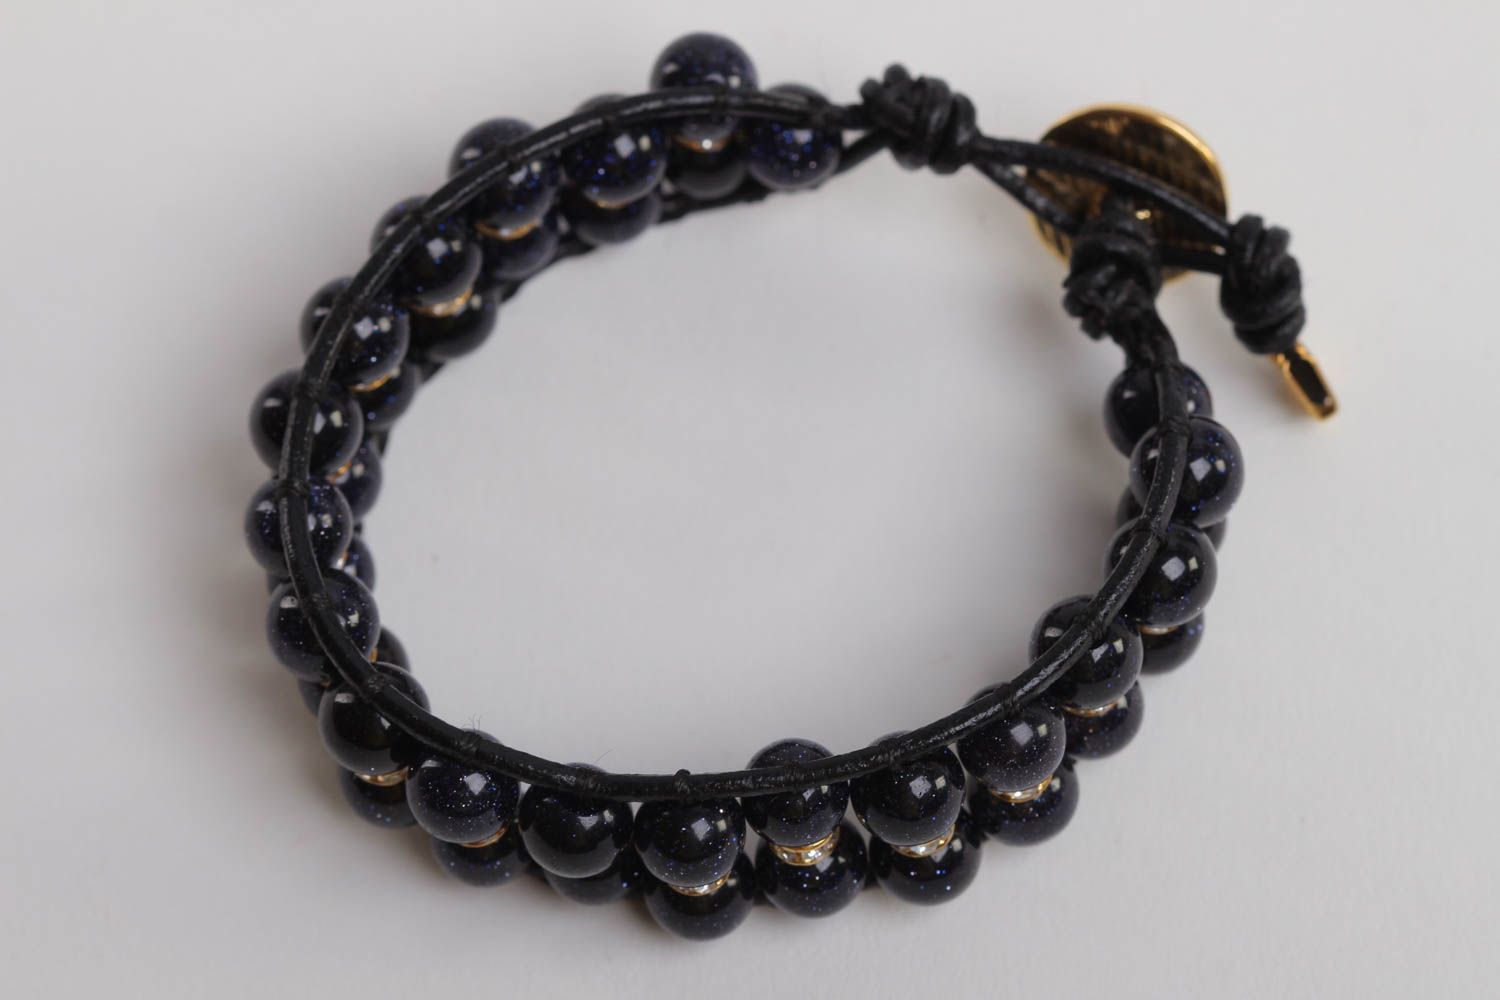 Beautiful handmade wrist bracelet designs gemstone bead bracelet gifts for her photo 2